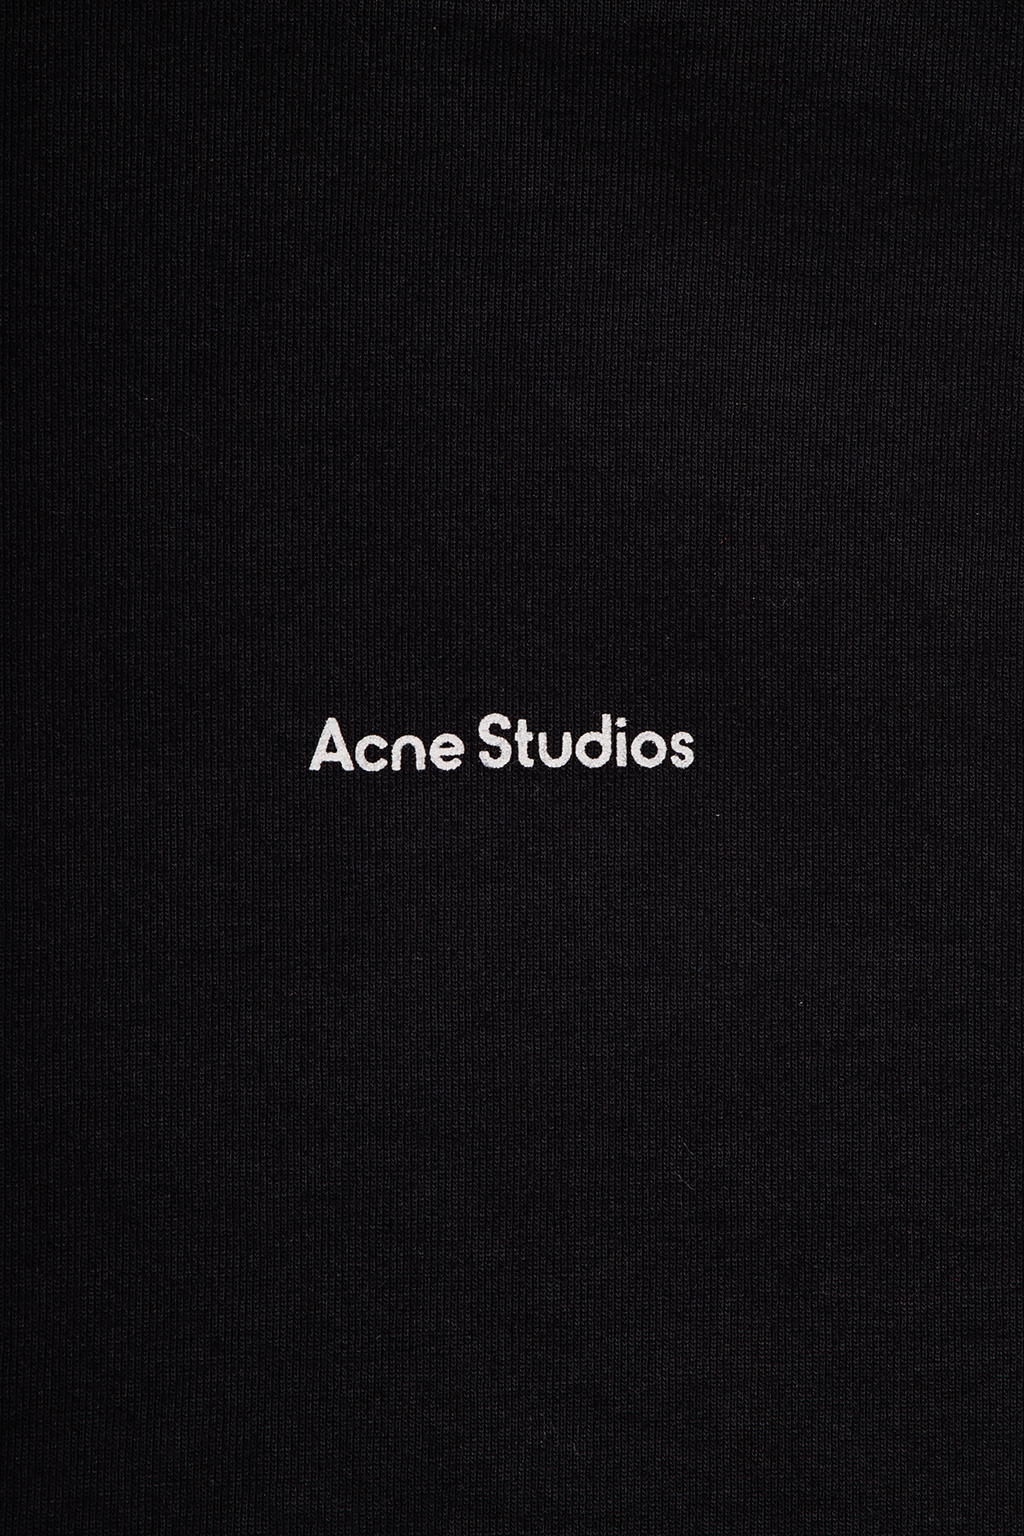 Acne Studios Sporty & Rich Ball Game slogan T-shirt